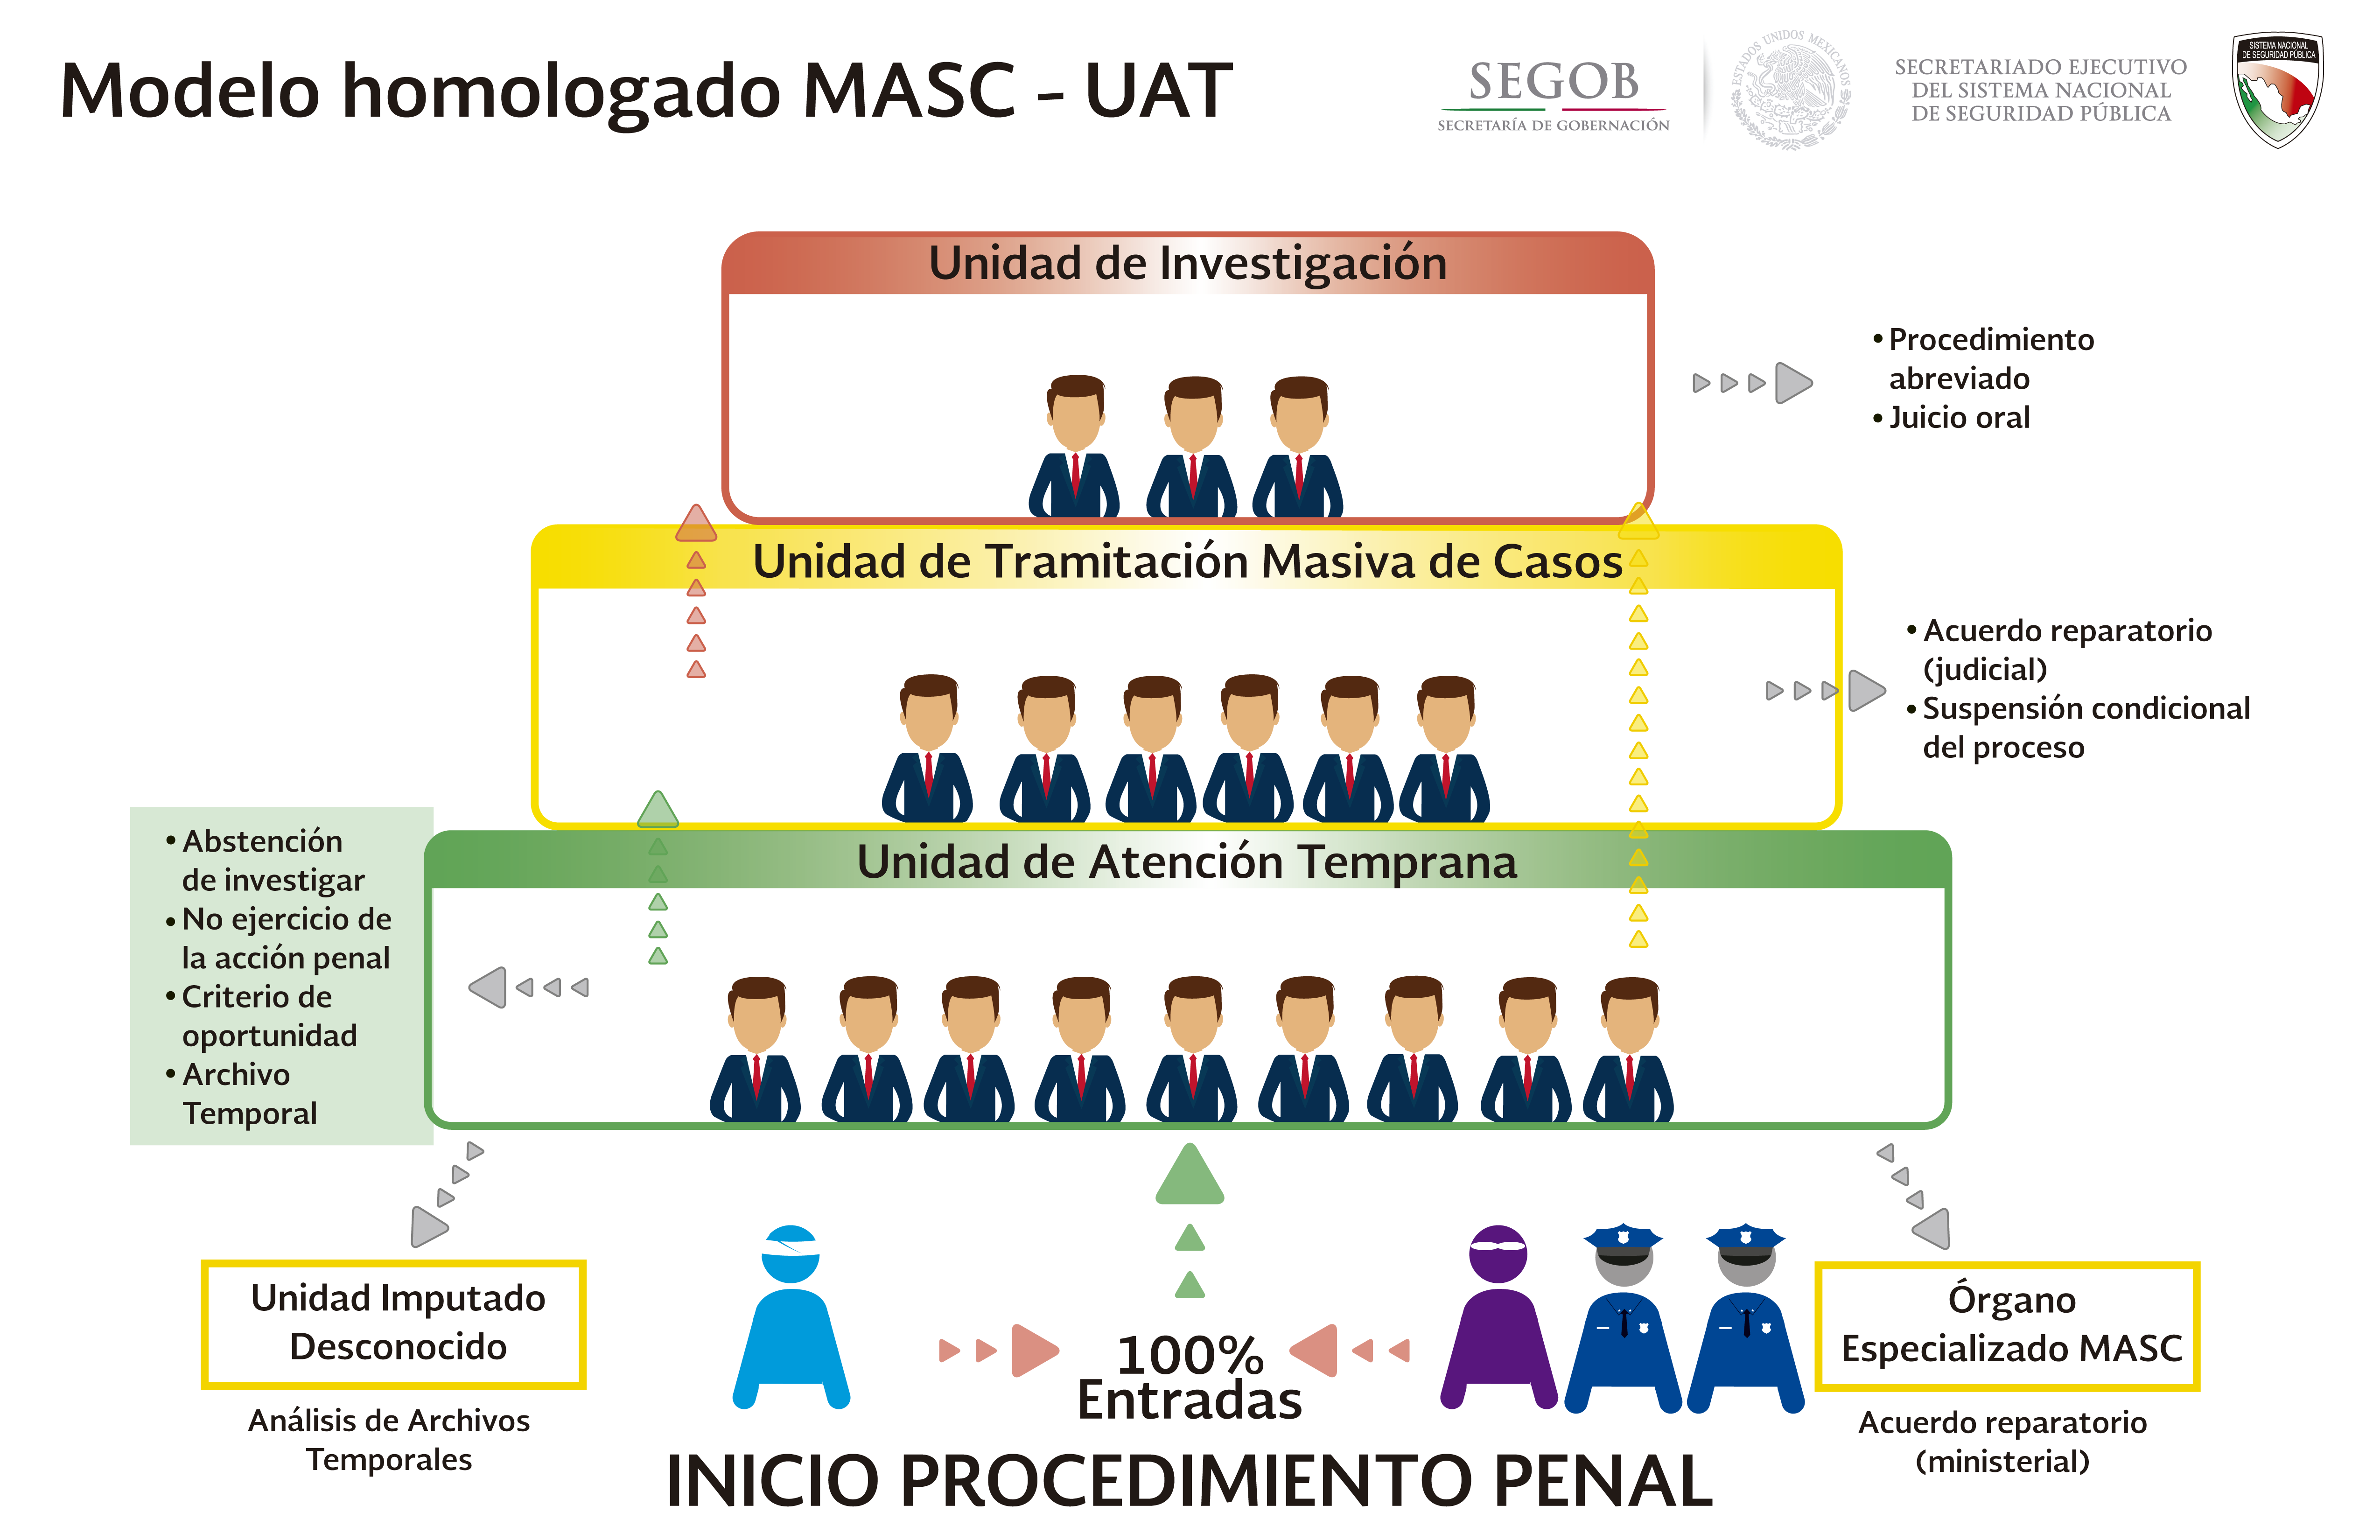 /cms/uploads/image/file/349611/infografia_MASC_UAT.png